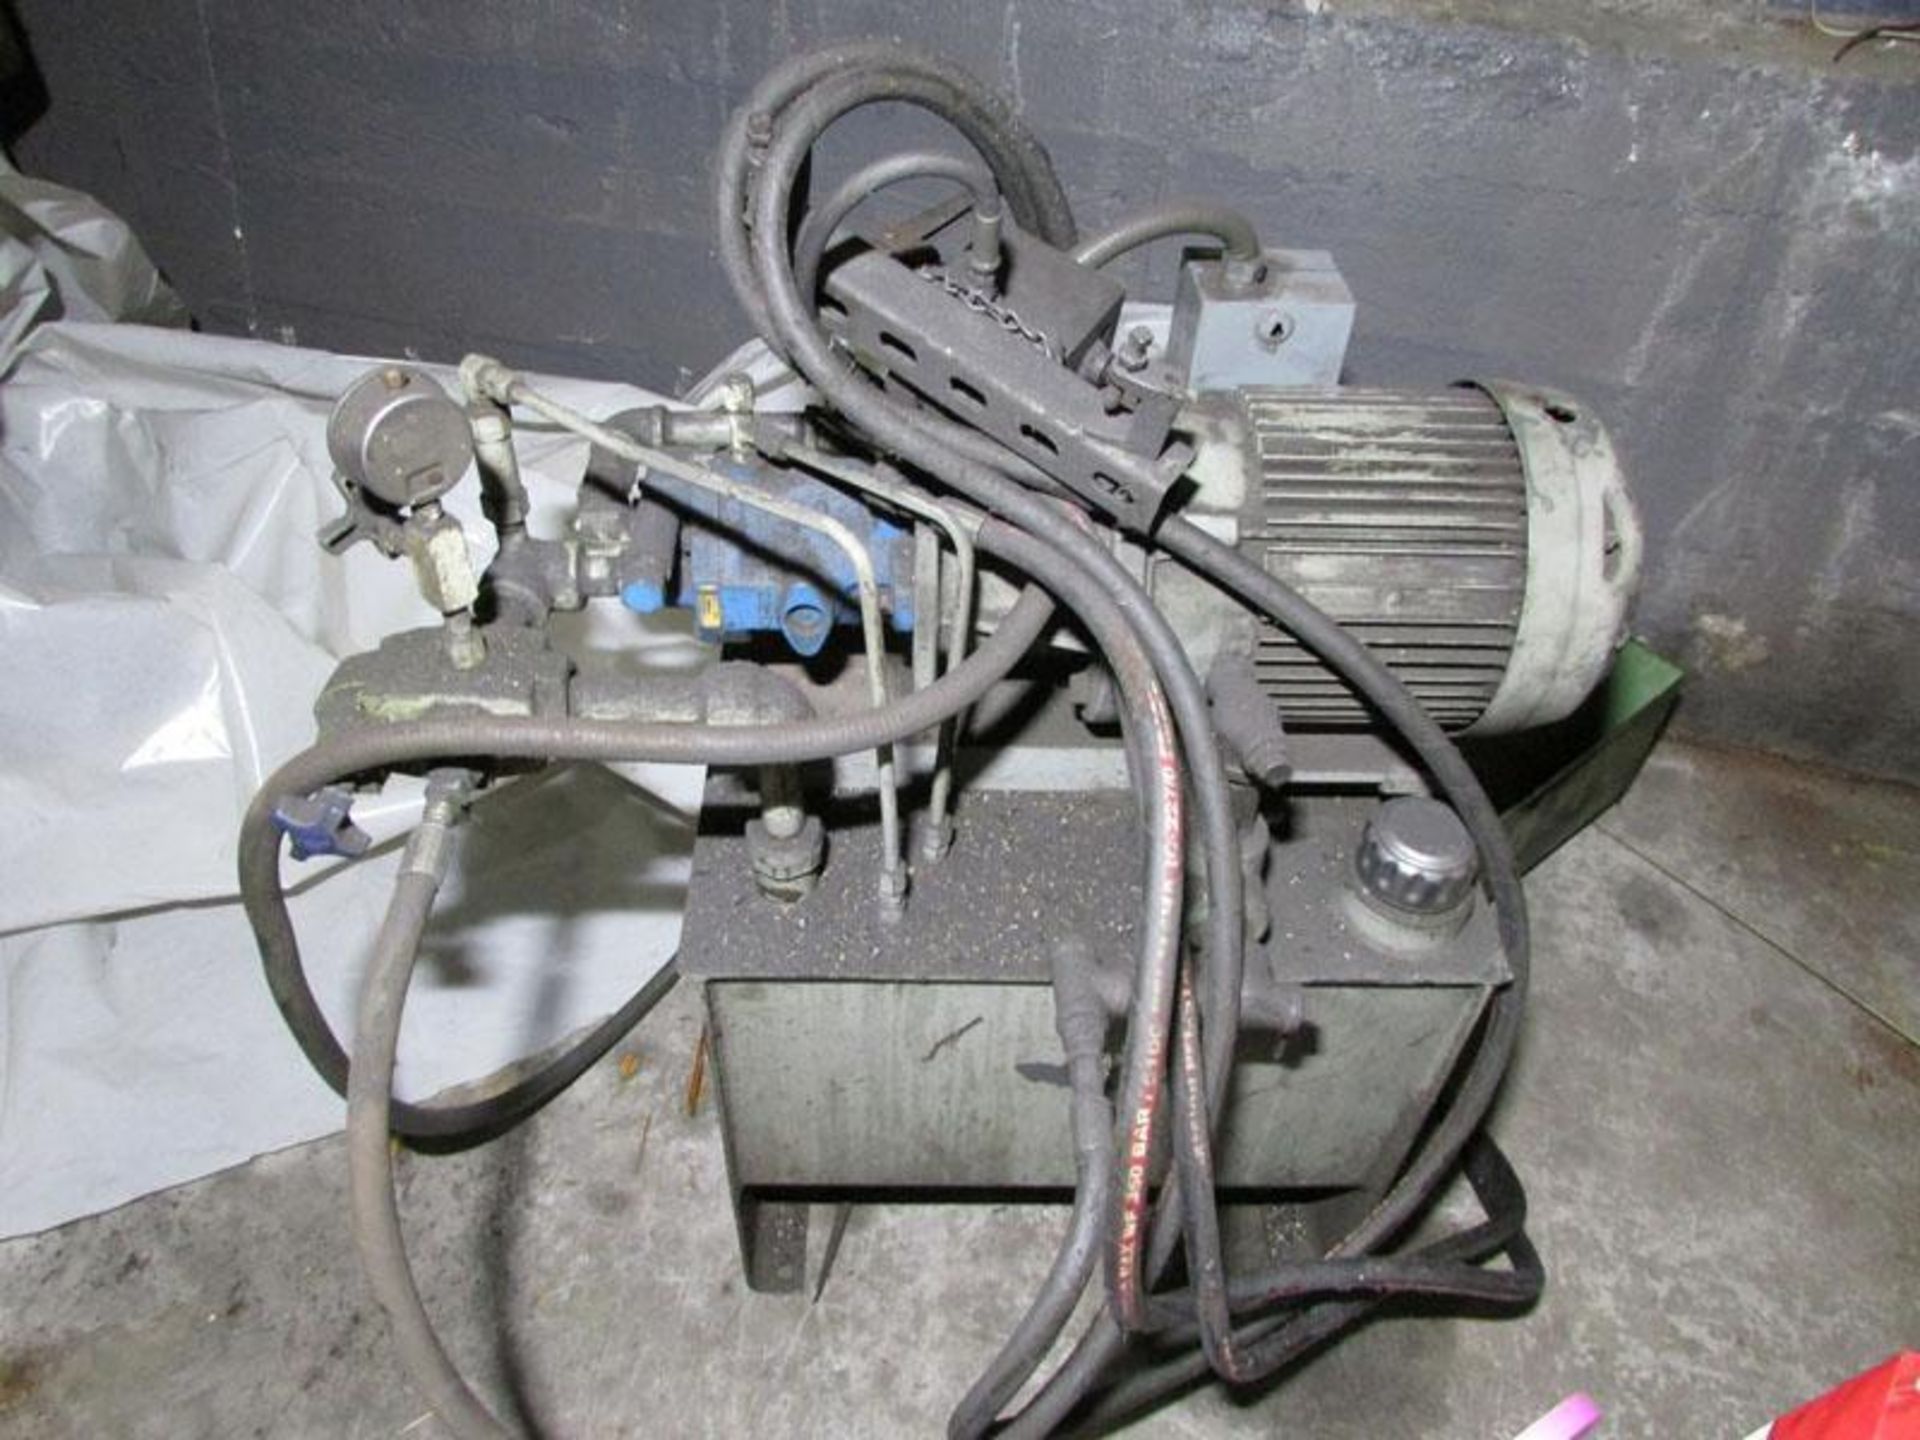 Cincinnati No. 4 Plain High Power Dial Type Horizontal Milling Machine - Image 7 of 11